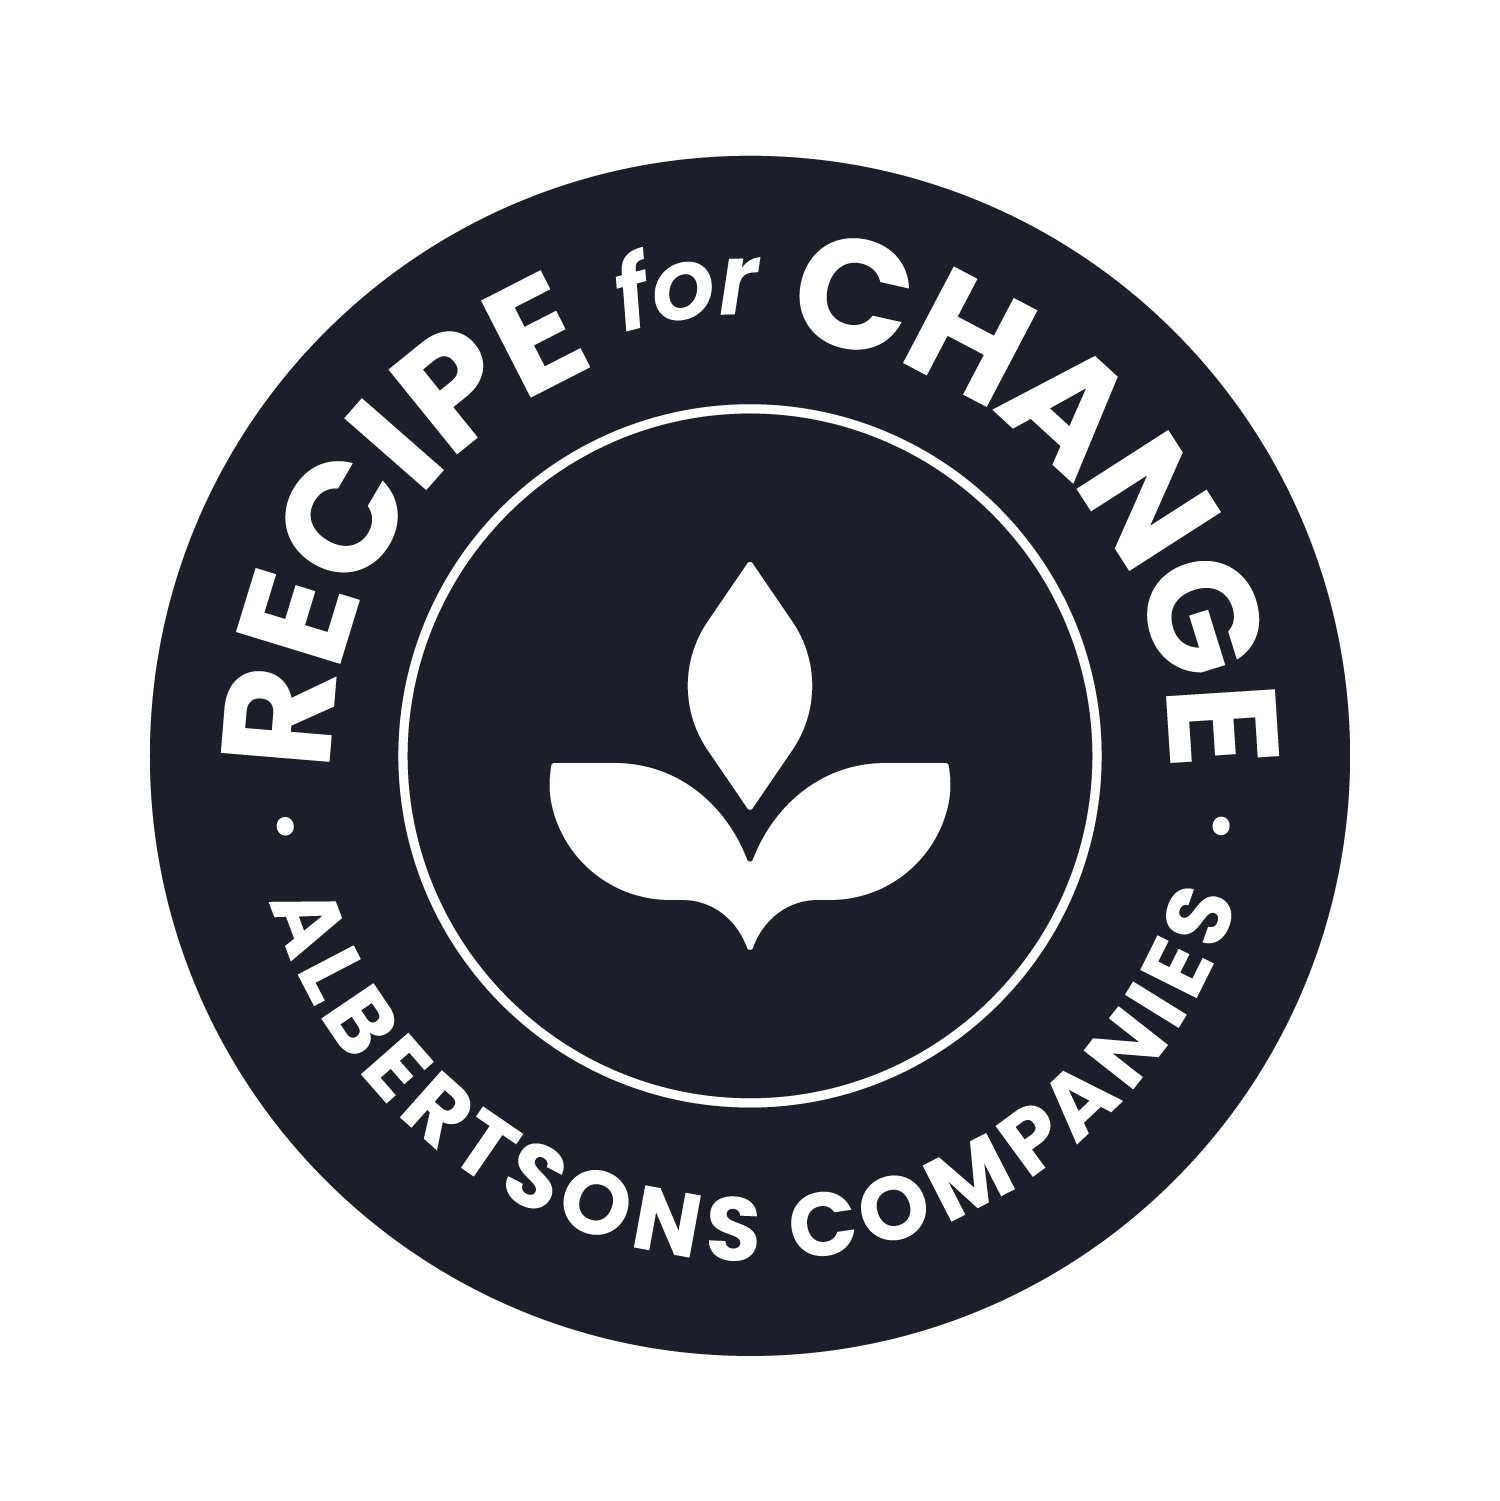 Albertsons Companies Recipe for Change logo